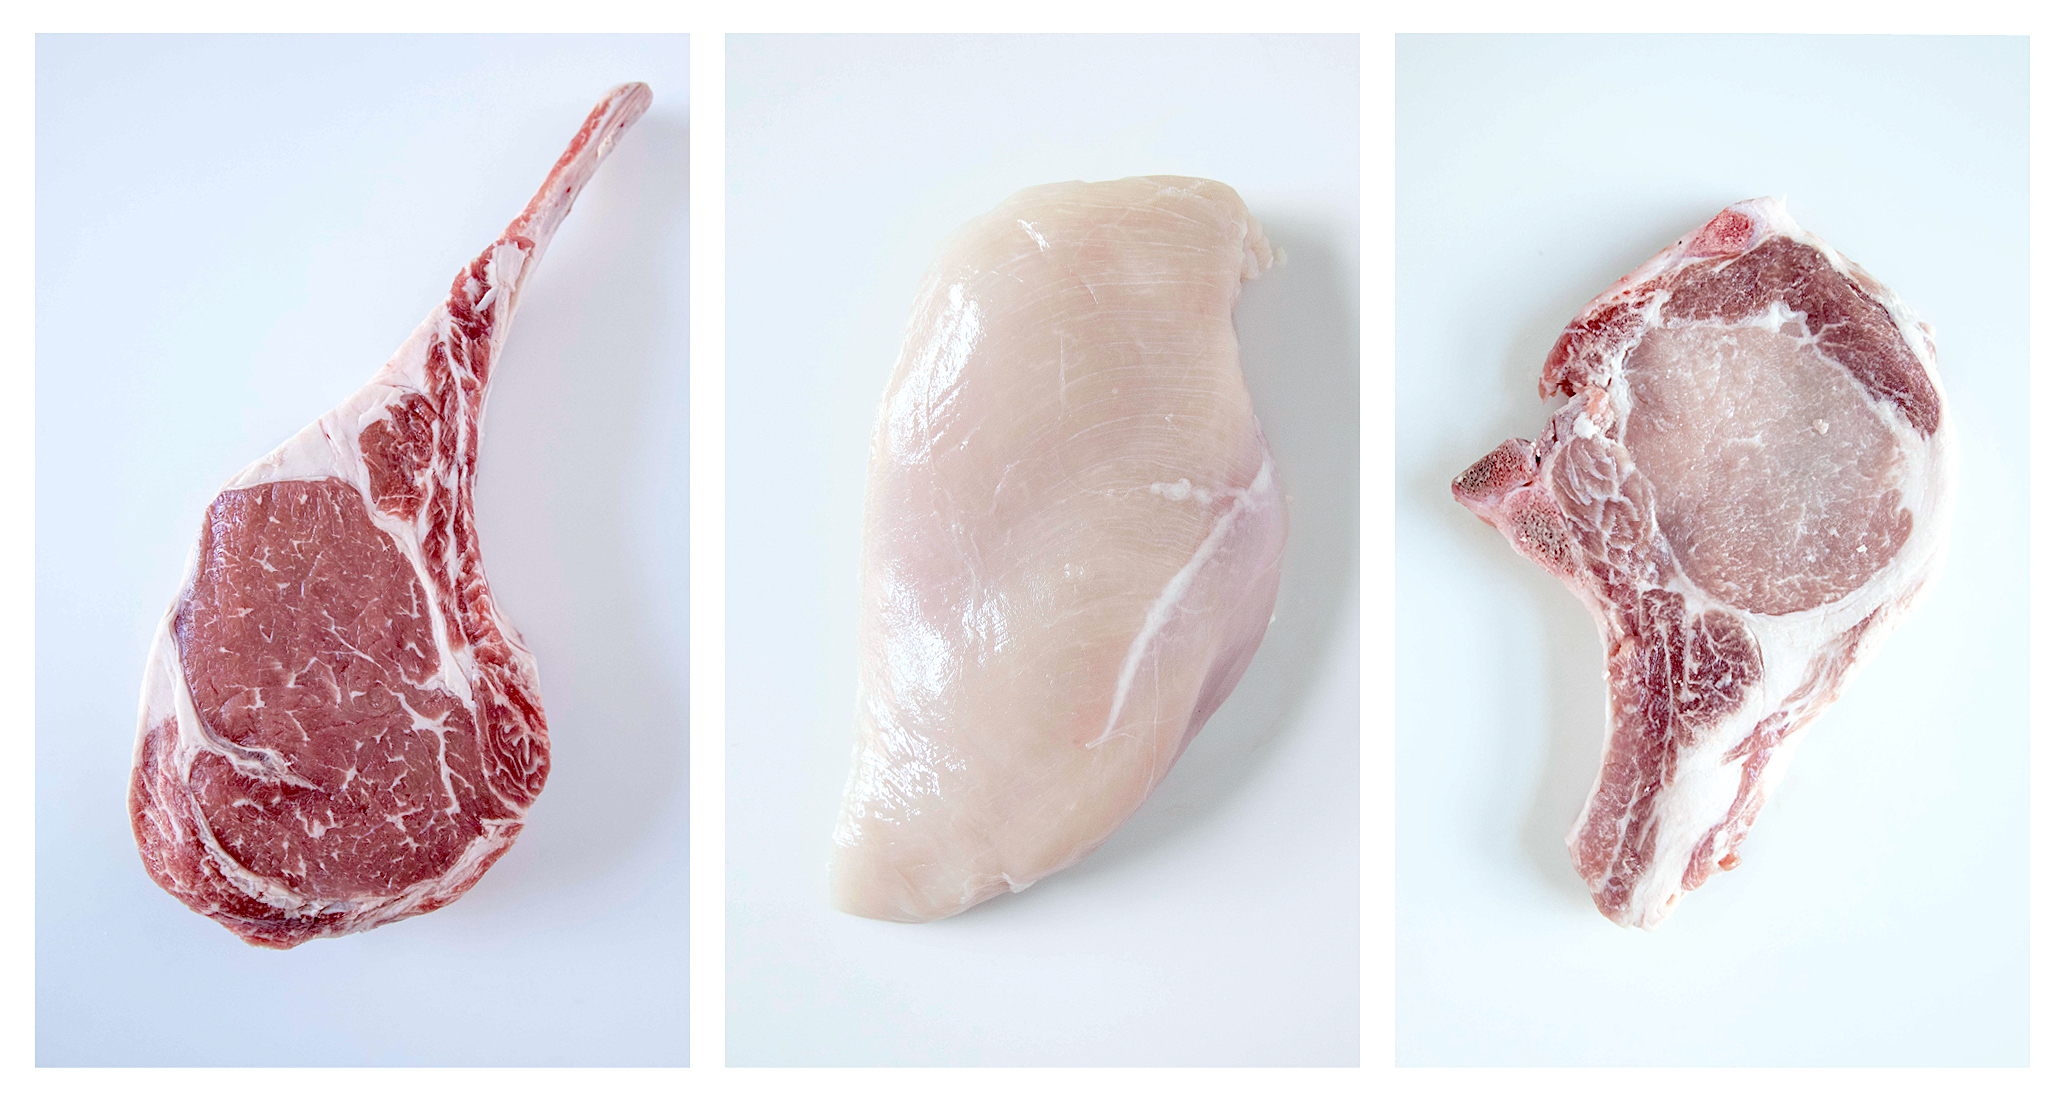 Raw meat on a white background. Tomahawk steak, chicken breast, and bone in pork chop